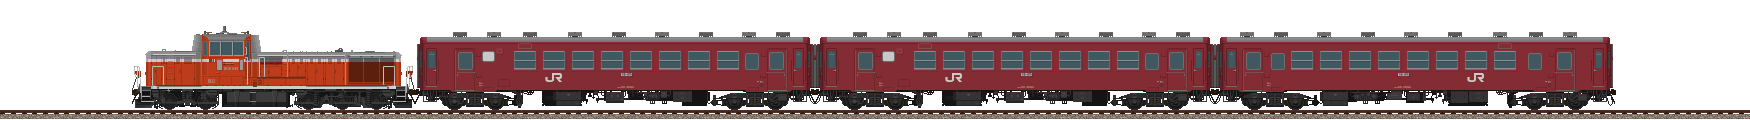 DE10が牽引する50系客車普通列車(2013/6/8･50系客車修正更新)